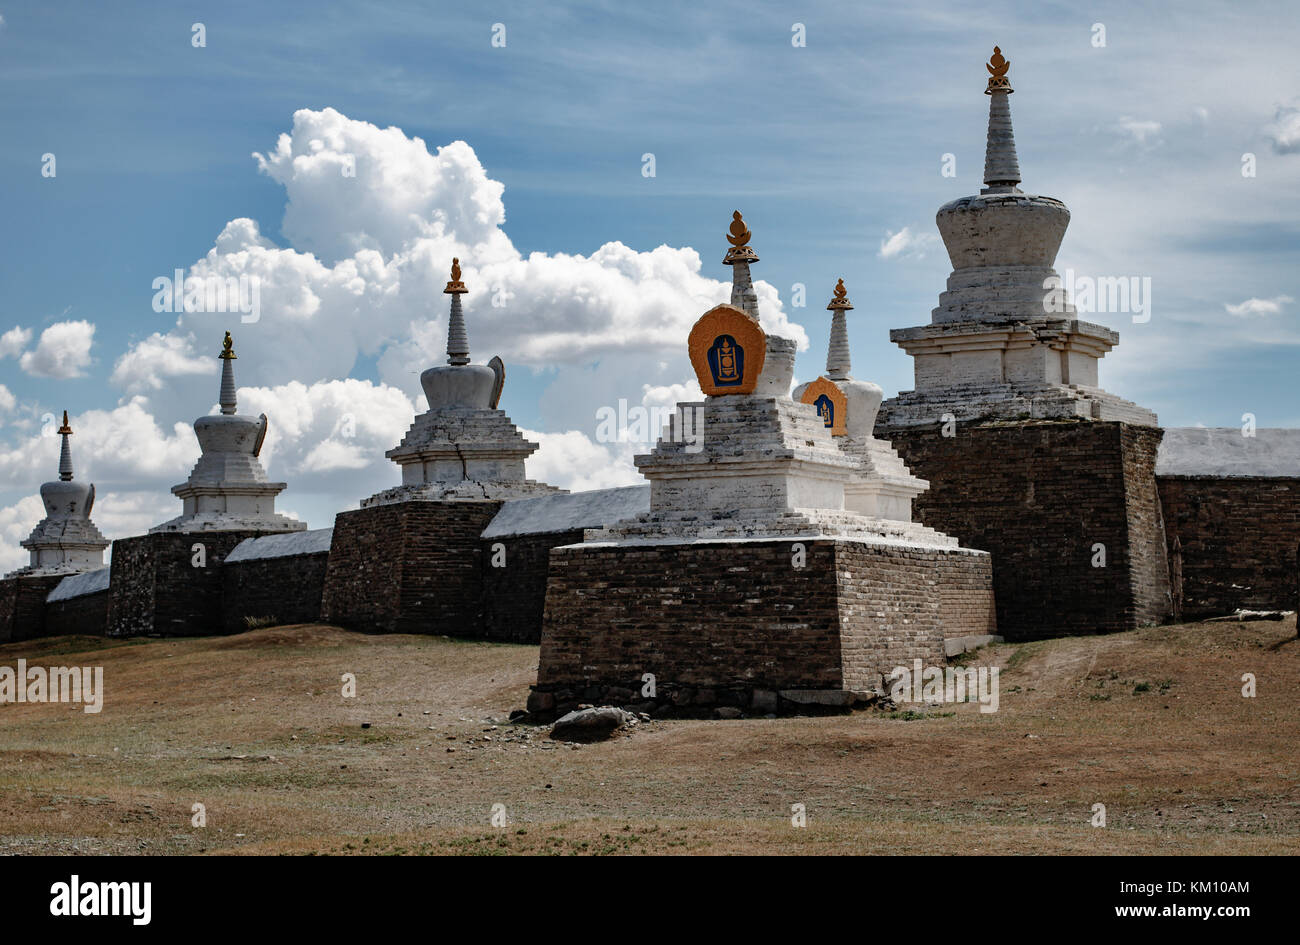 Monastery temple in Karakorum, capital of the mongolian empire Stock Photo